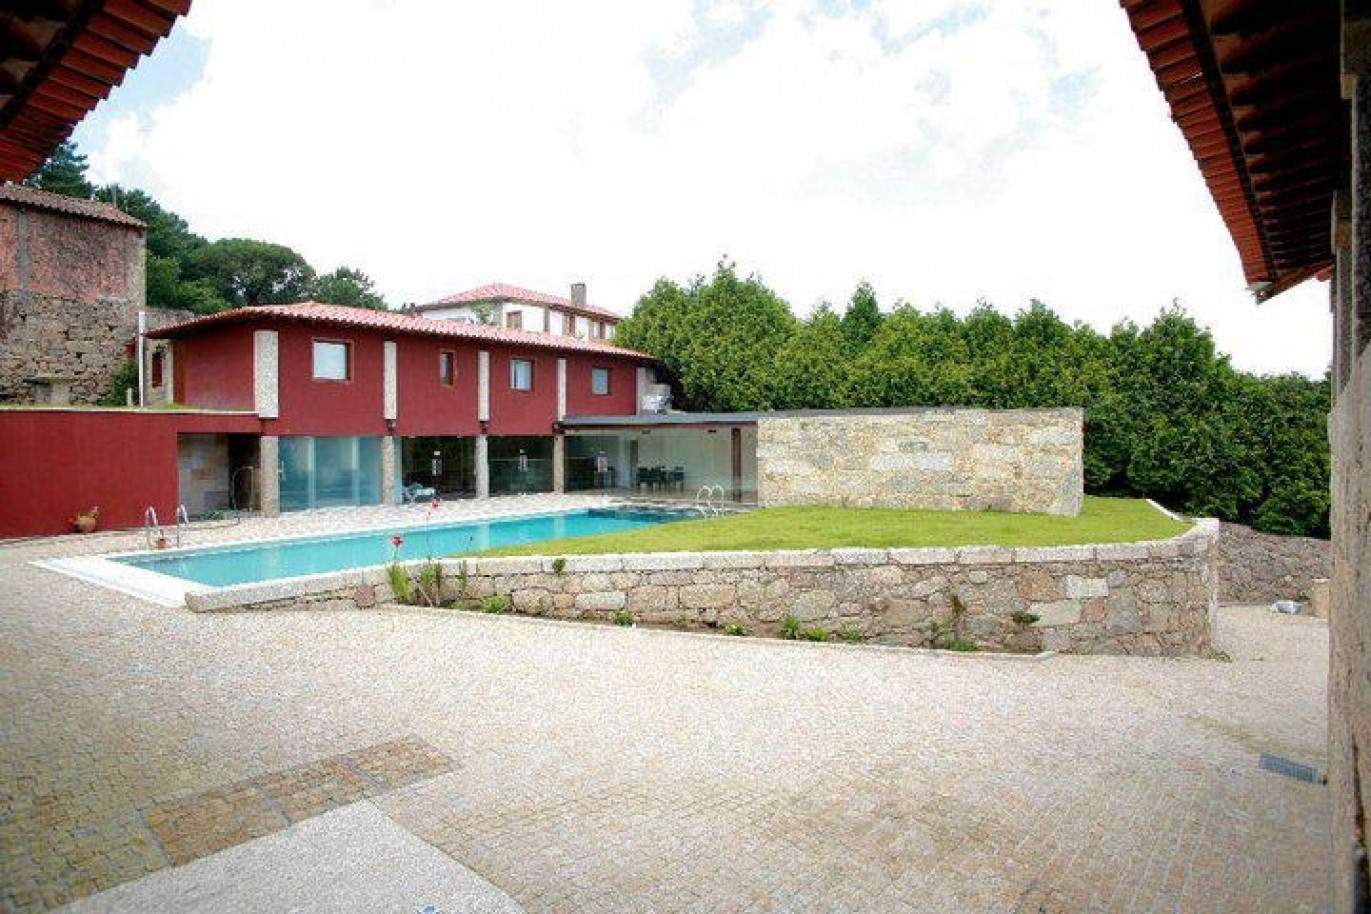 Hotel rural com piscina e jardim, S. Vicente Penso, Braga_35967